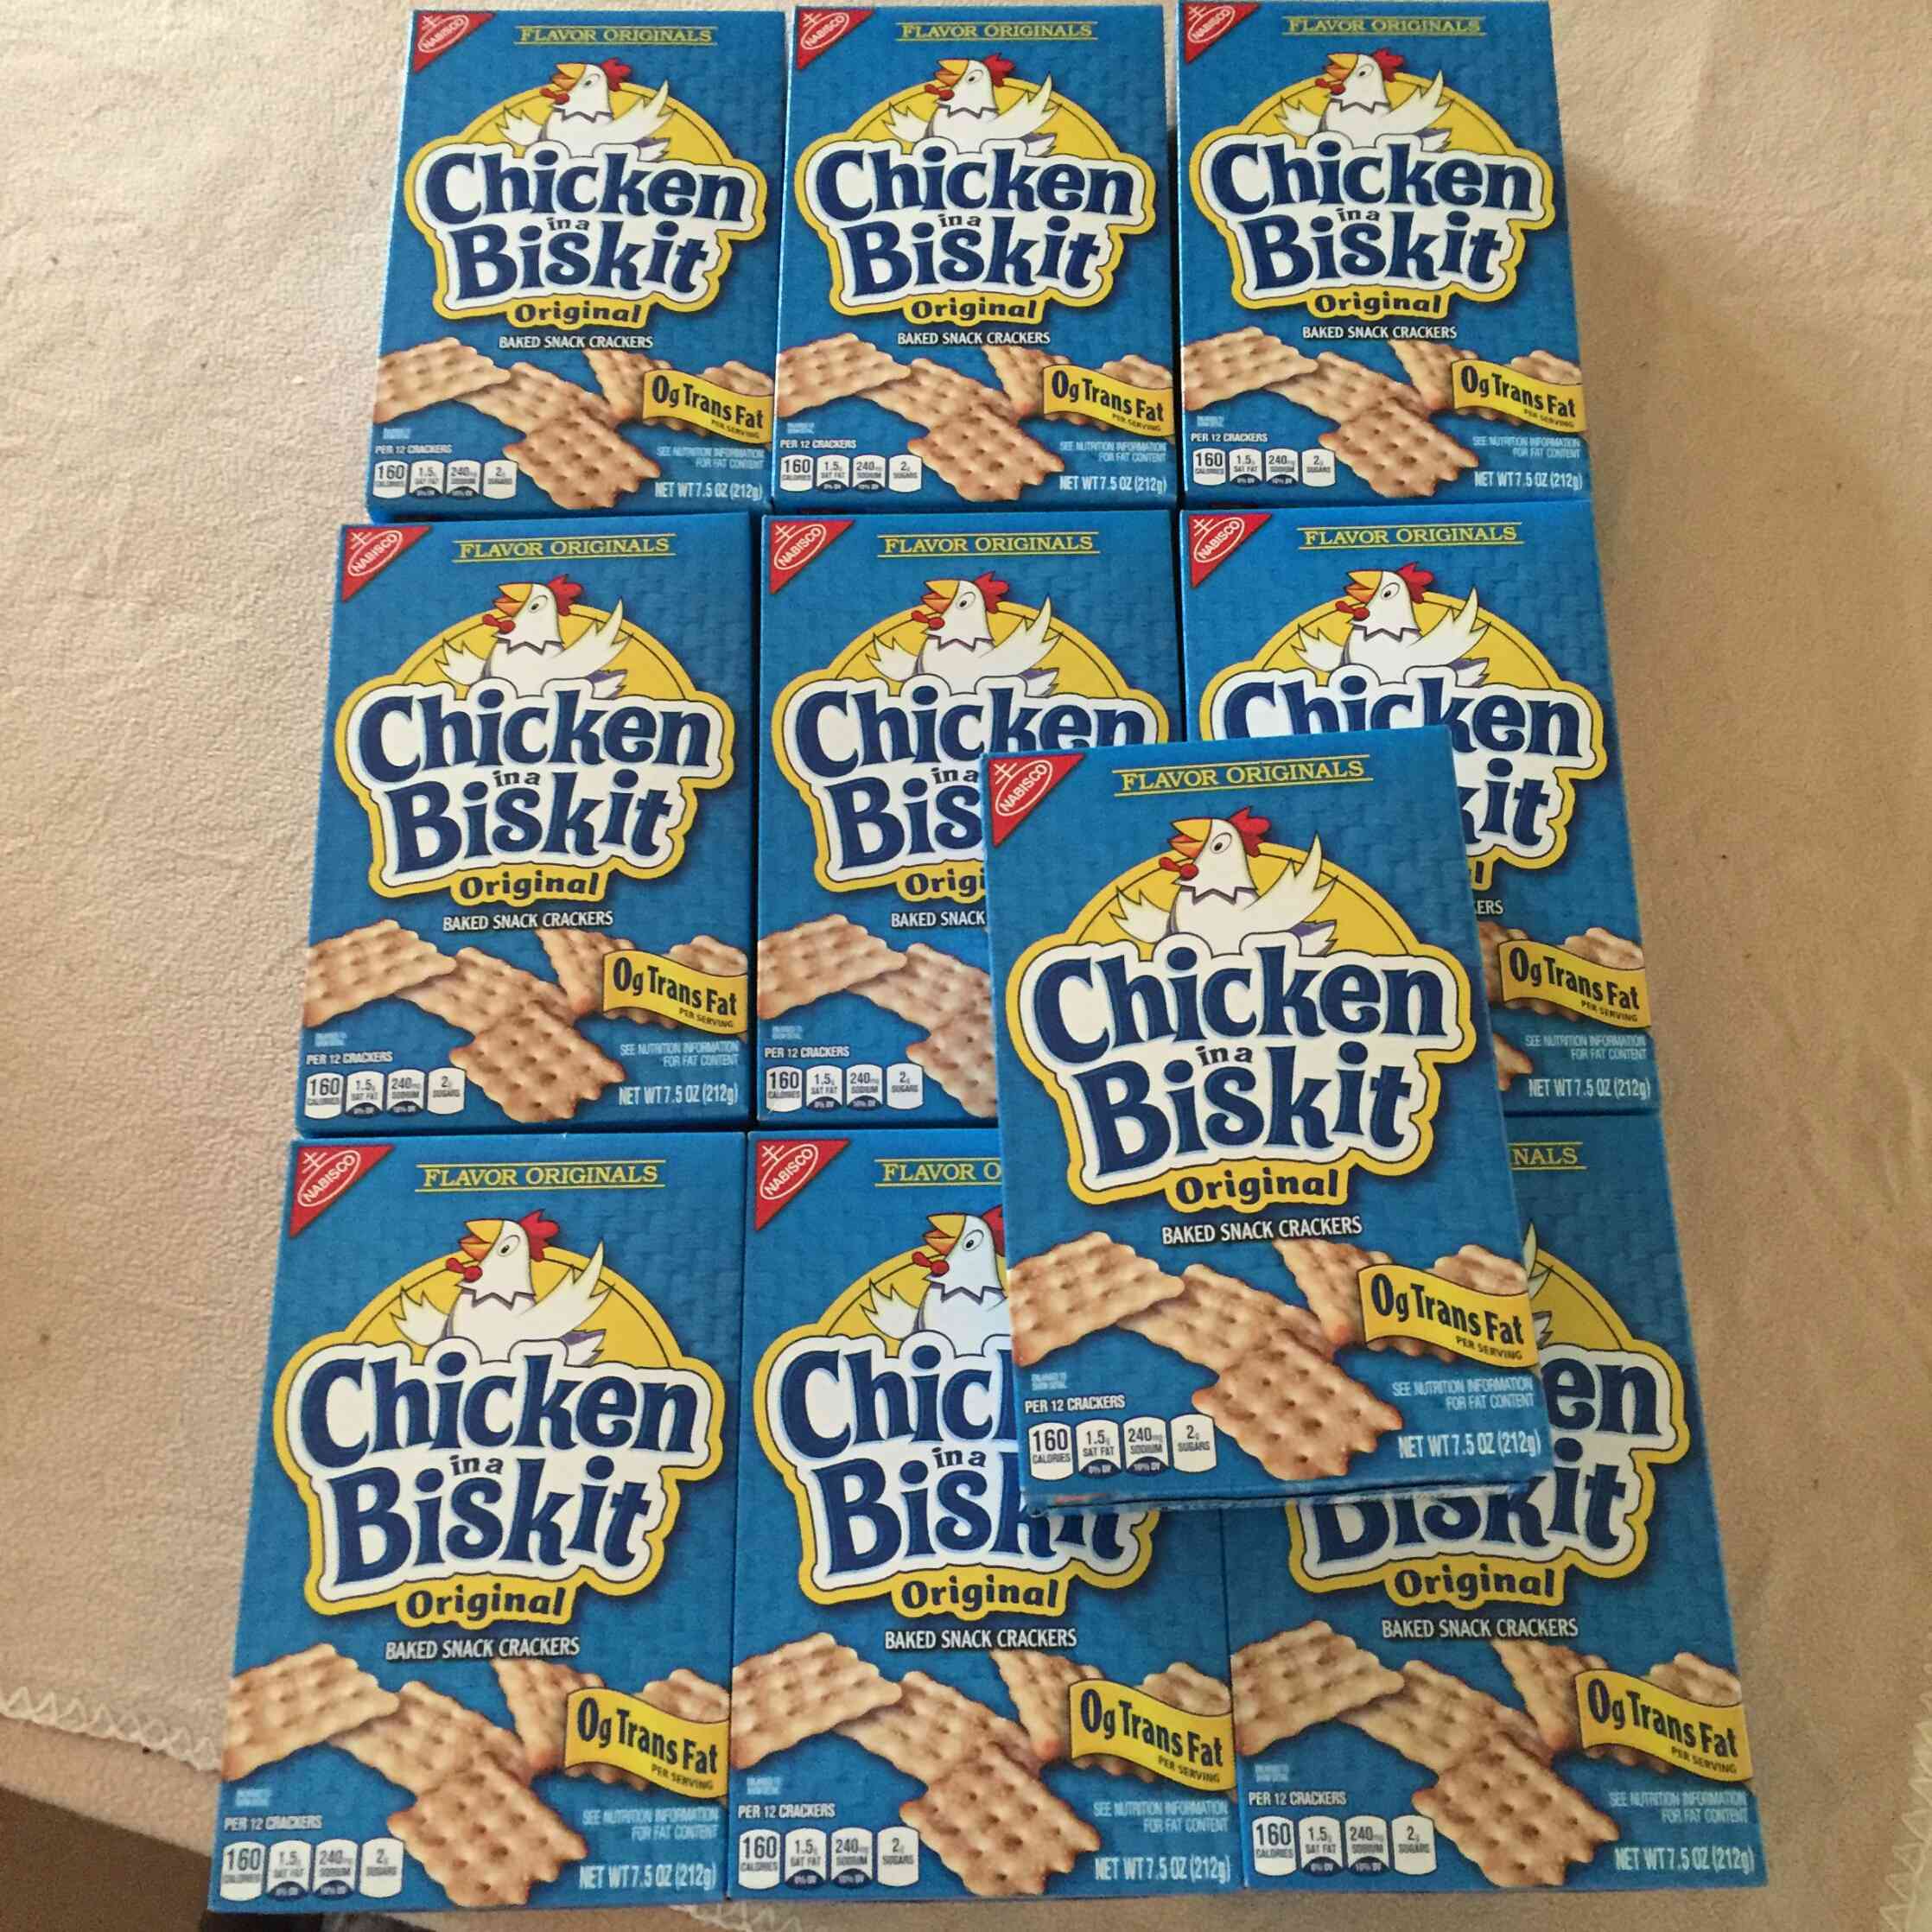 Nabisco Flavor Originals Chicken in a Biskit Original Baked Snack Crackers, 7.5 oz